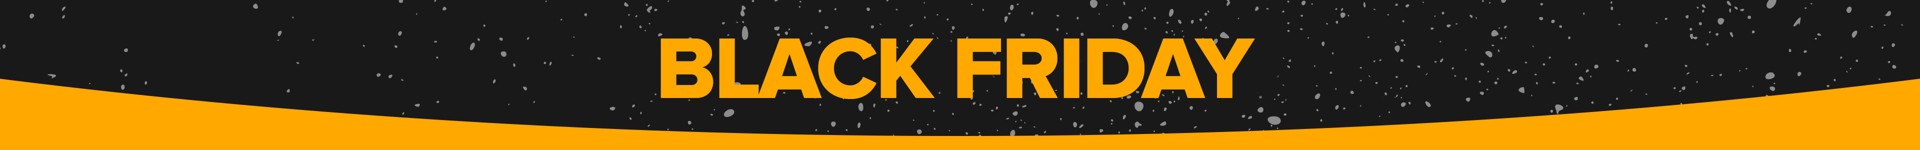 PS4 (Black Friday tilbud) 